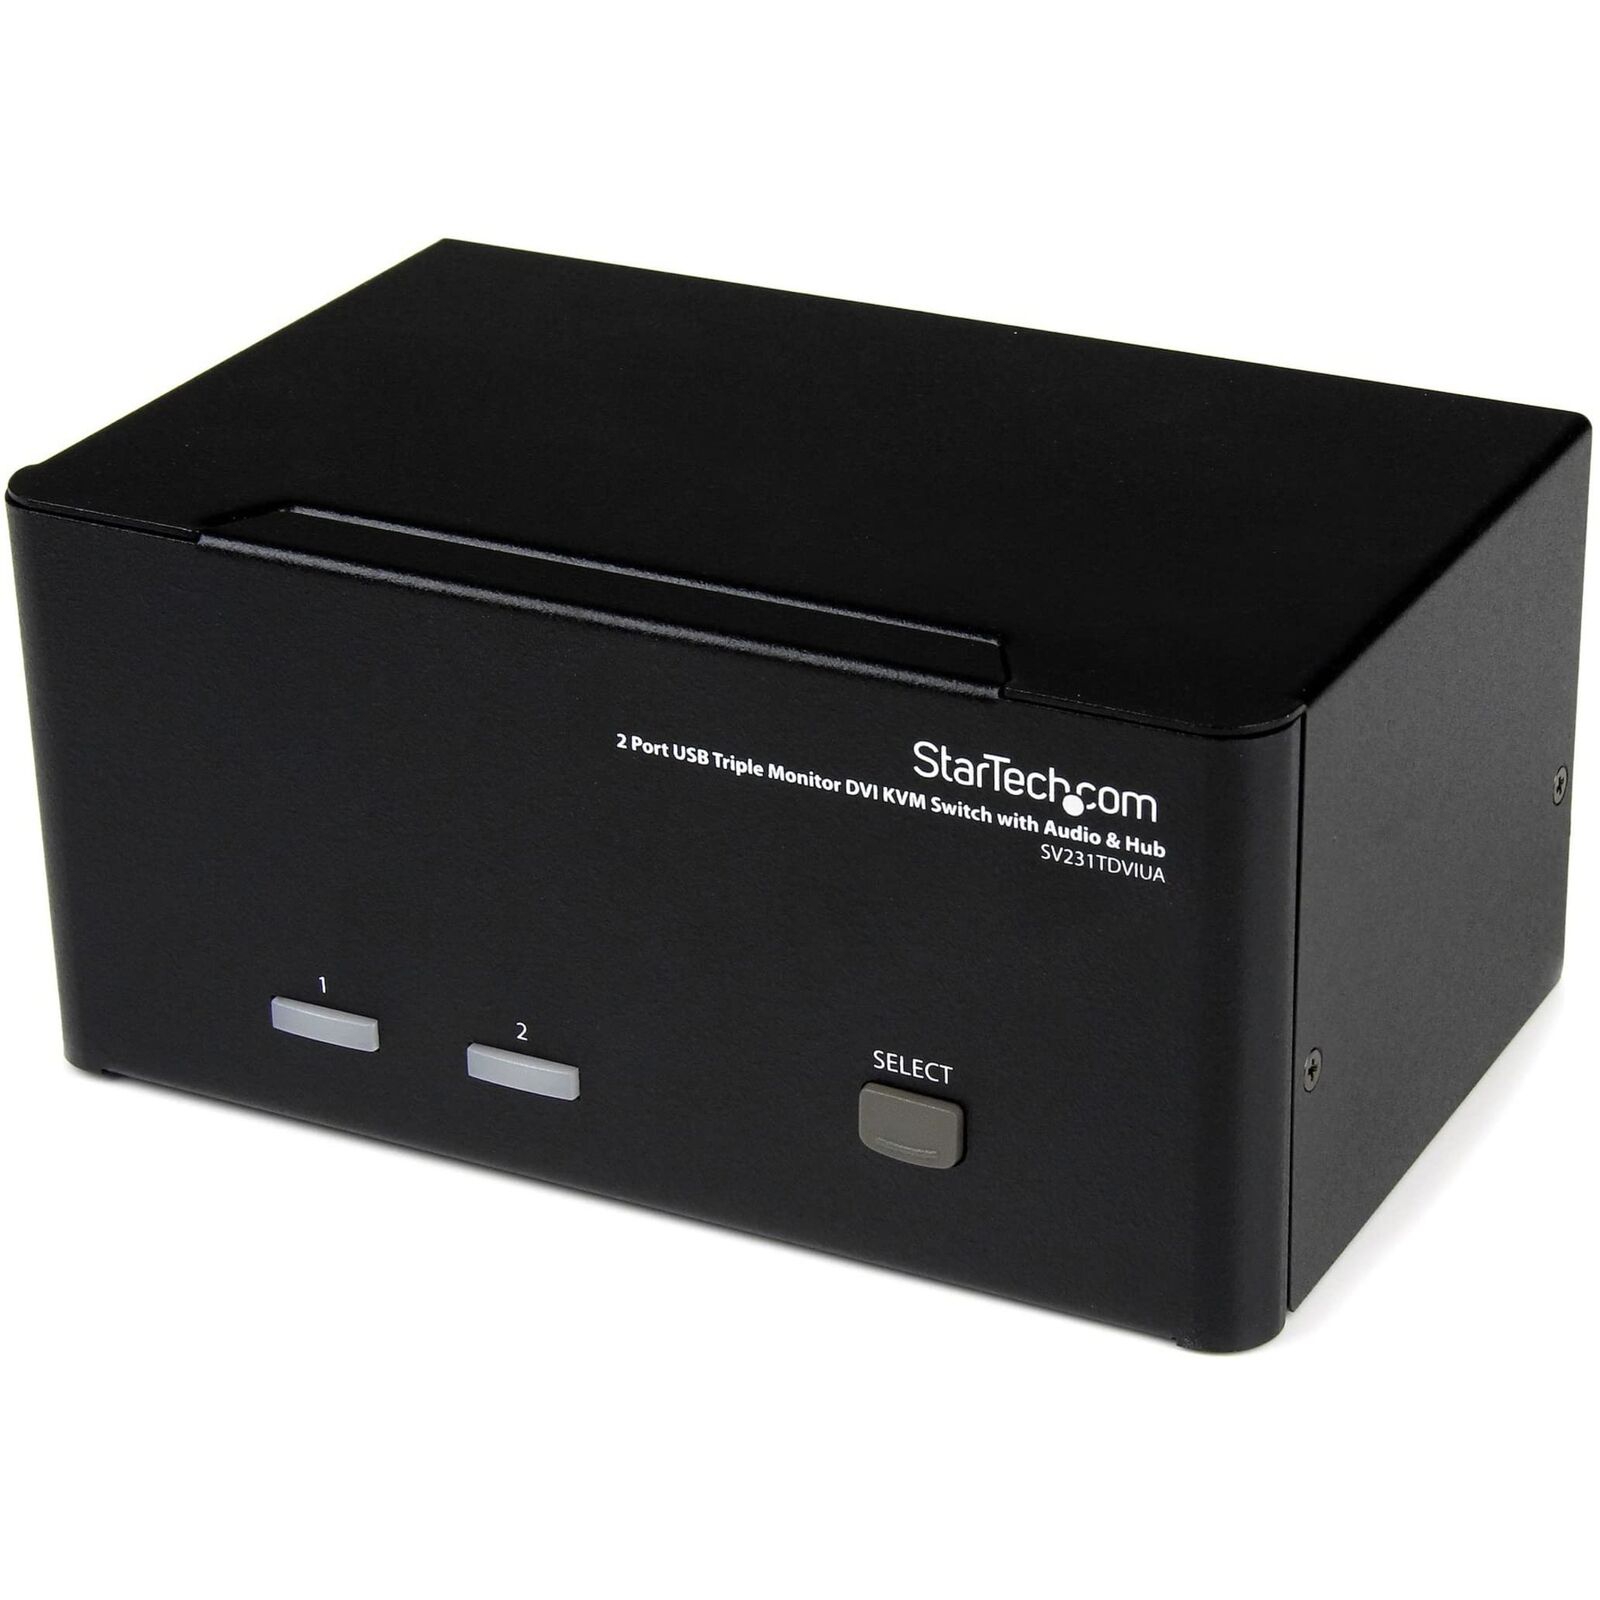 2 Port Triple Monitor DVI USB KVM Switch with Audio & USB 2.0 Hub - Multi Mon...